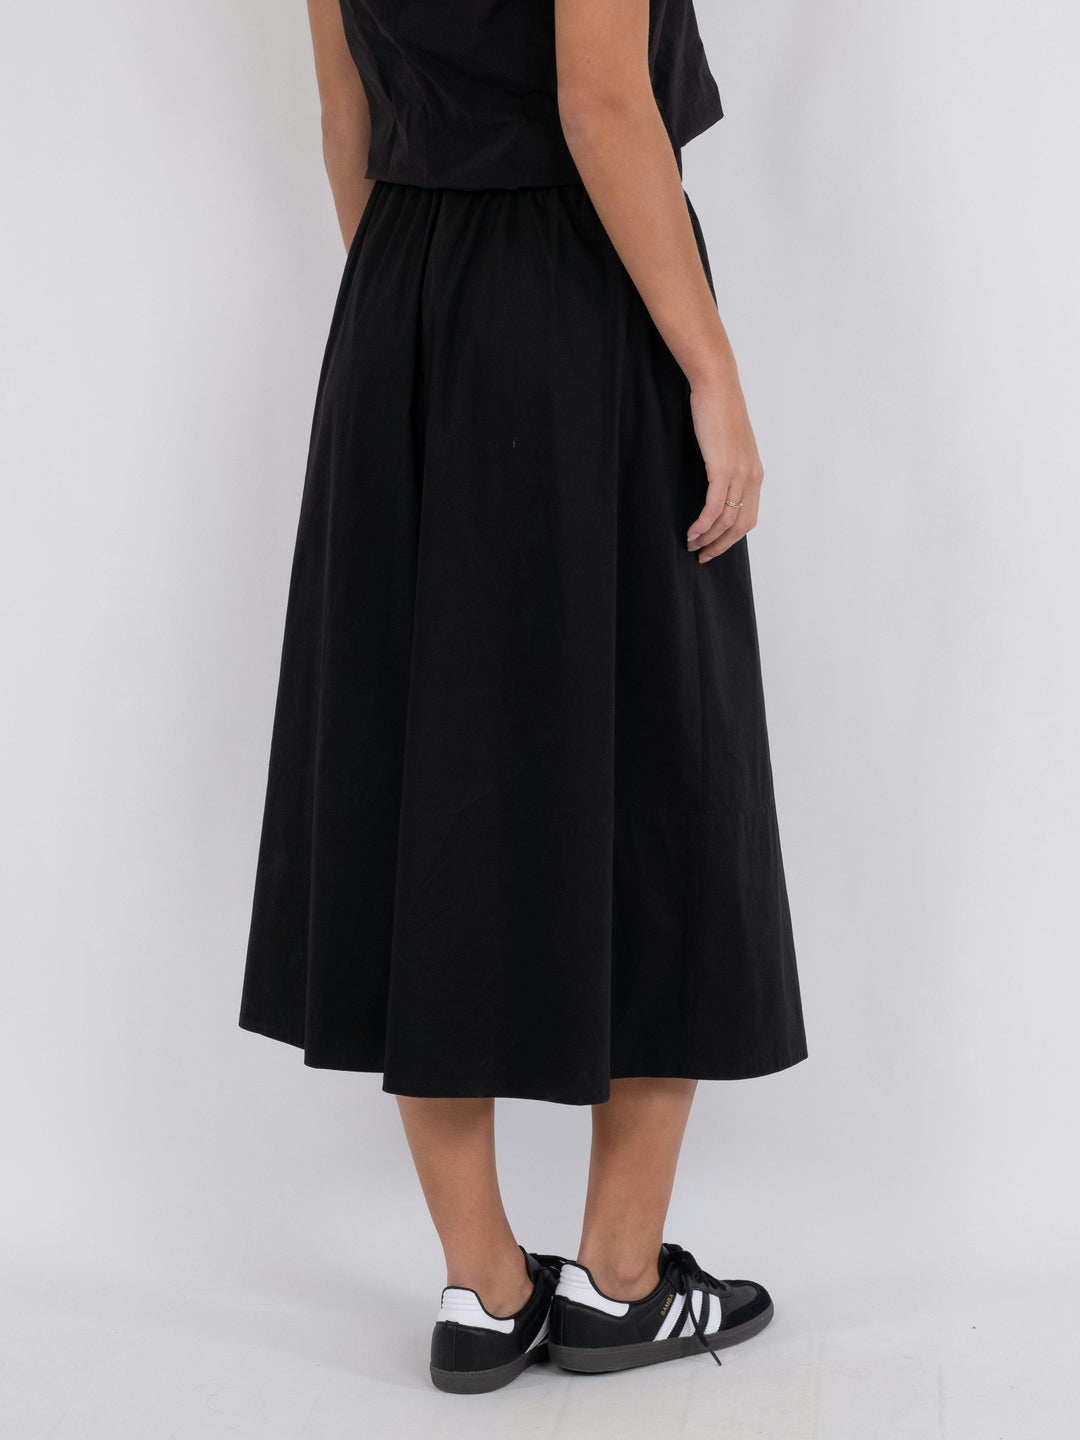 Neo Noir - Yara Poplin Skirt - Black